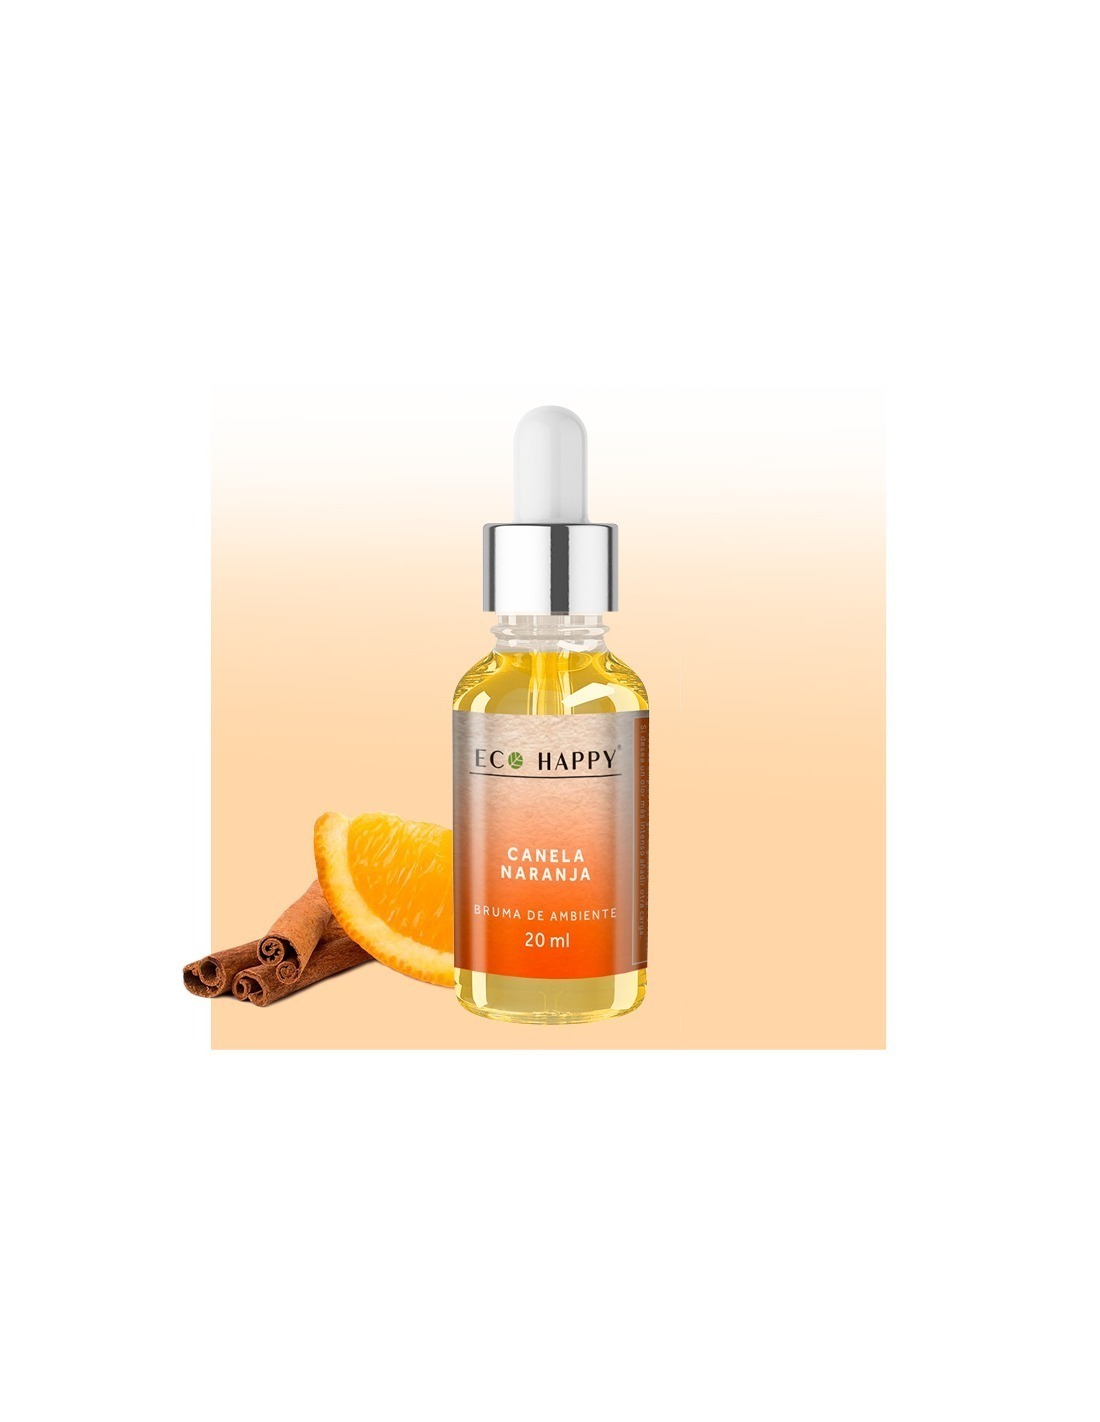 esencia humidificador brumaroma aceite esencial canela naranja